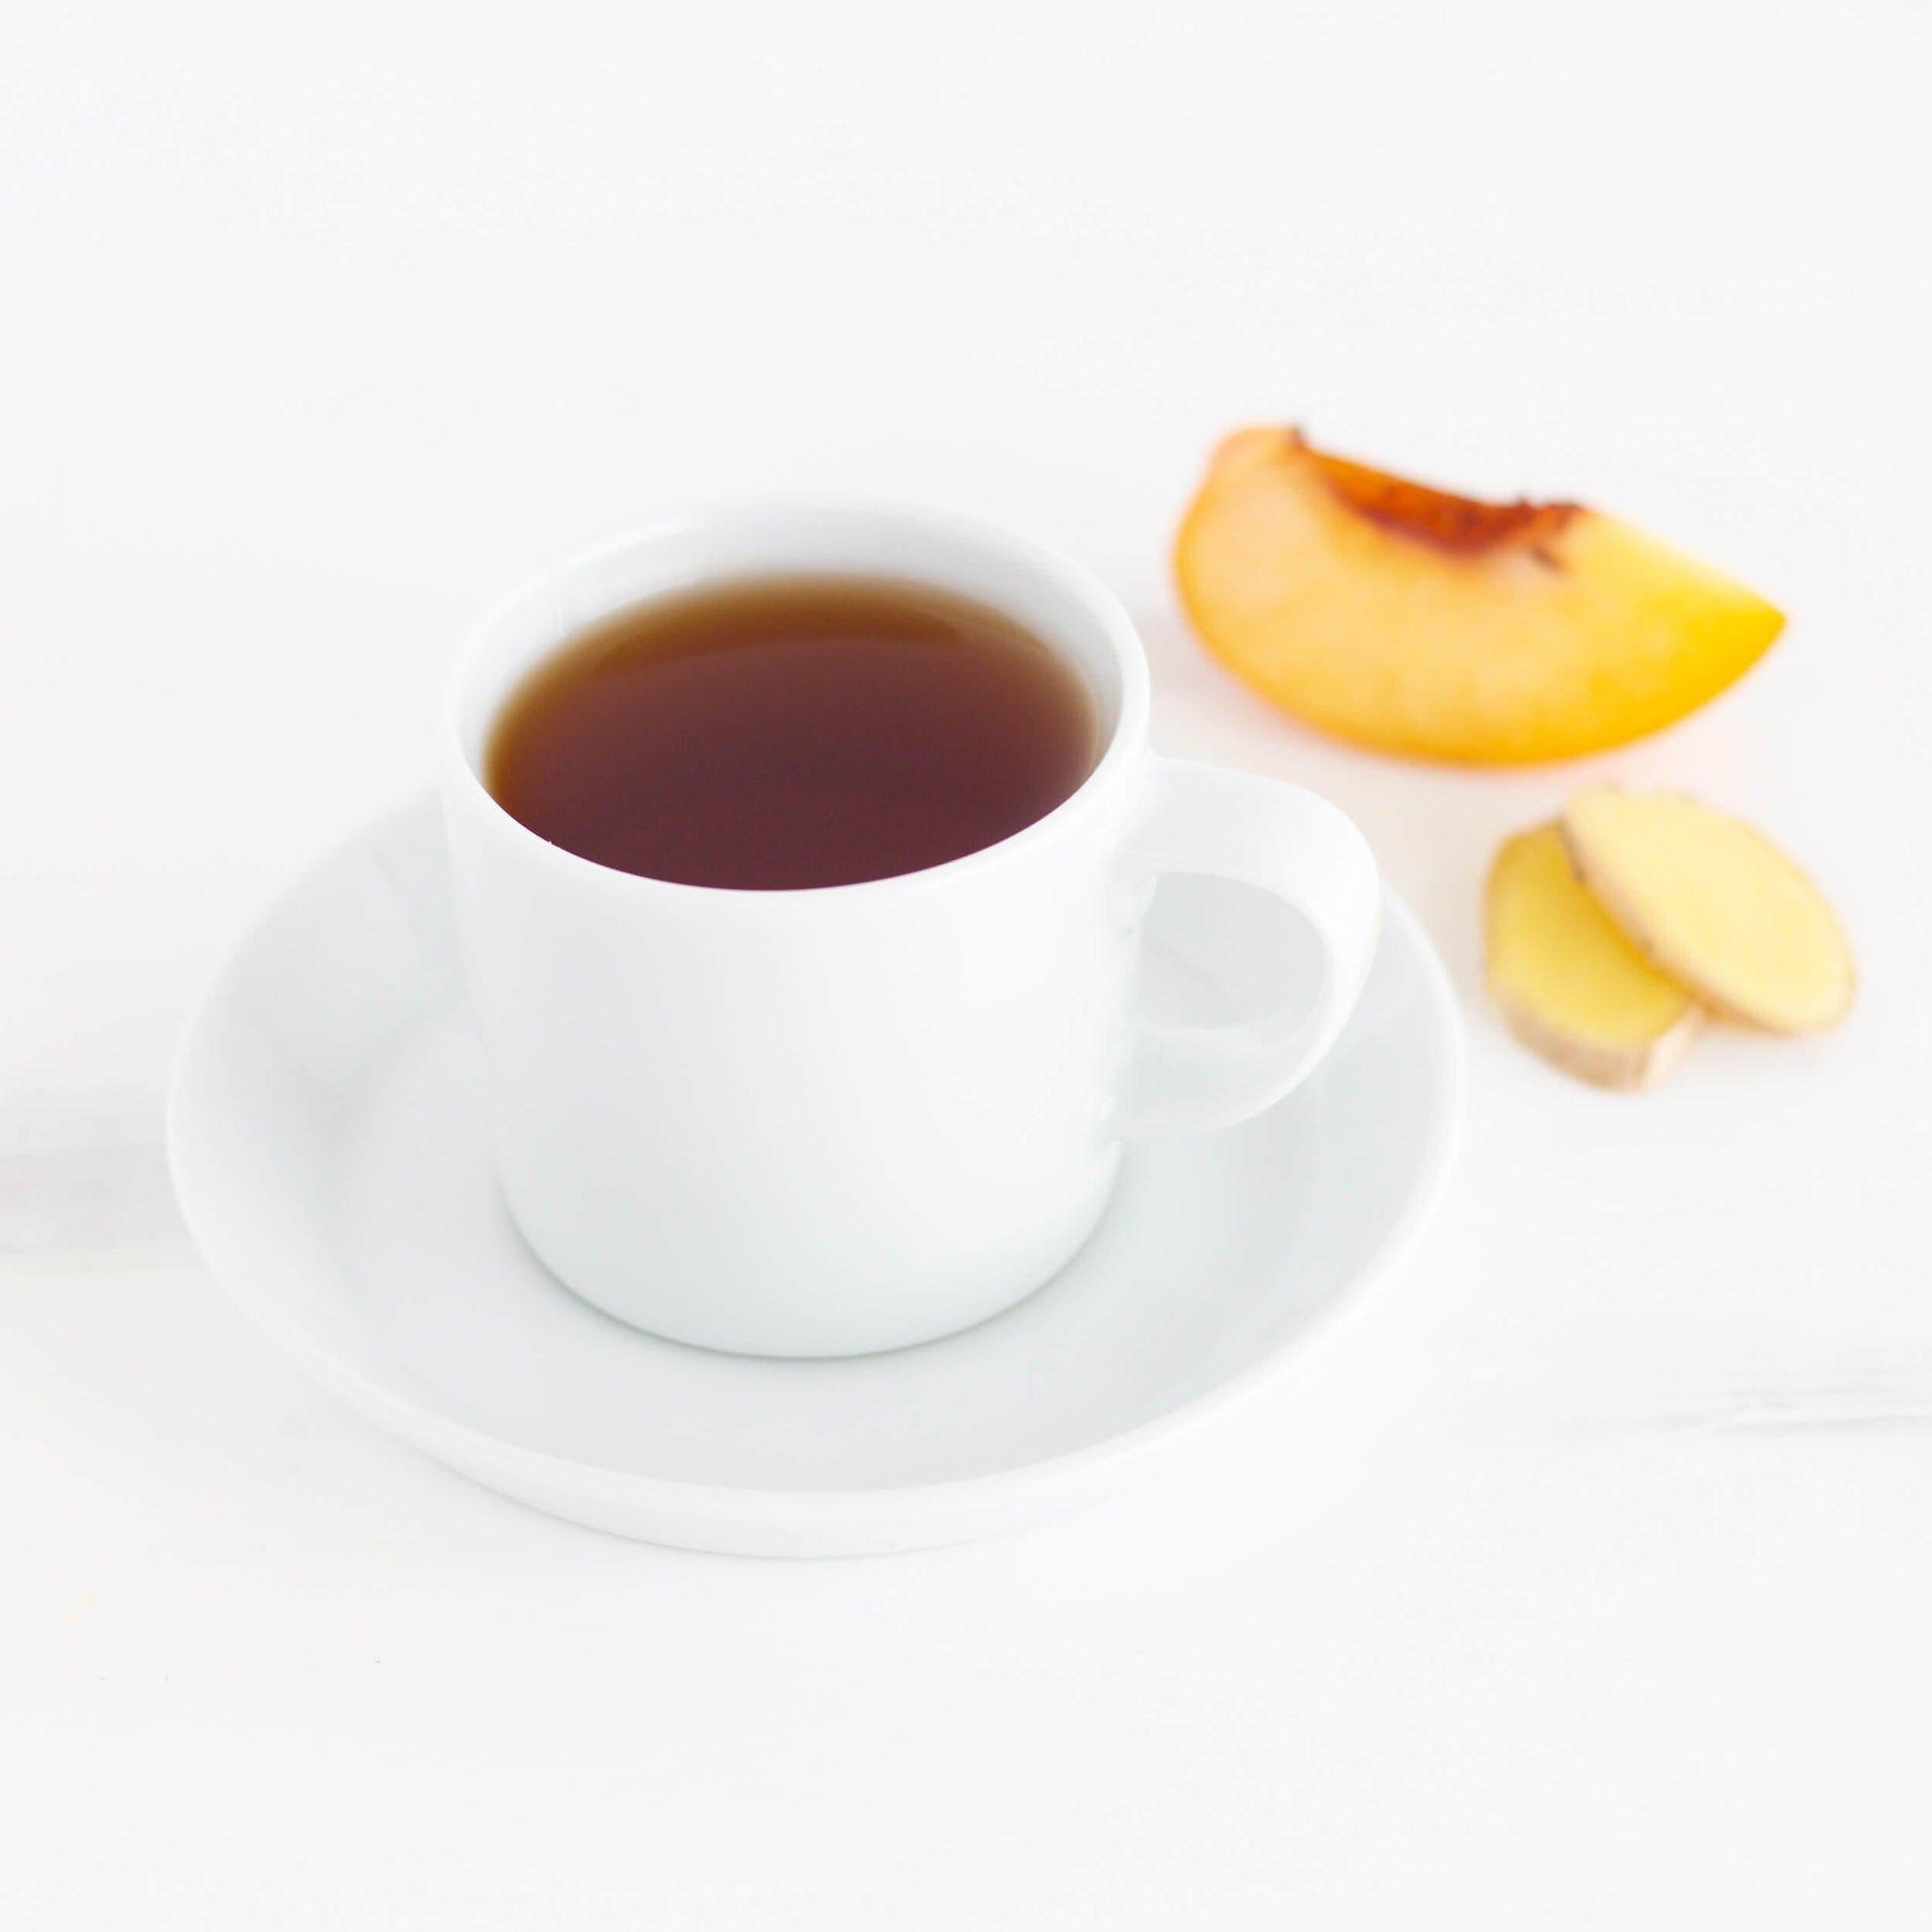 Ginger Peach Black Tea – ArtfulTea